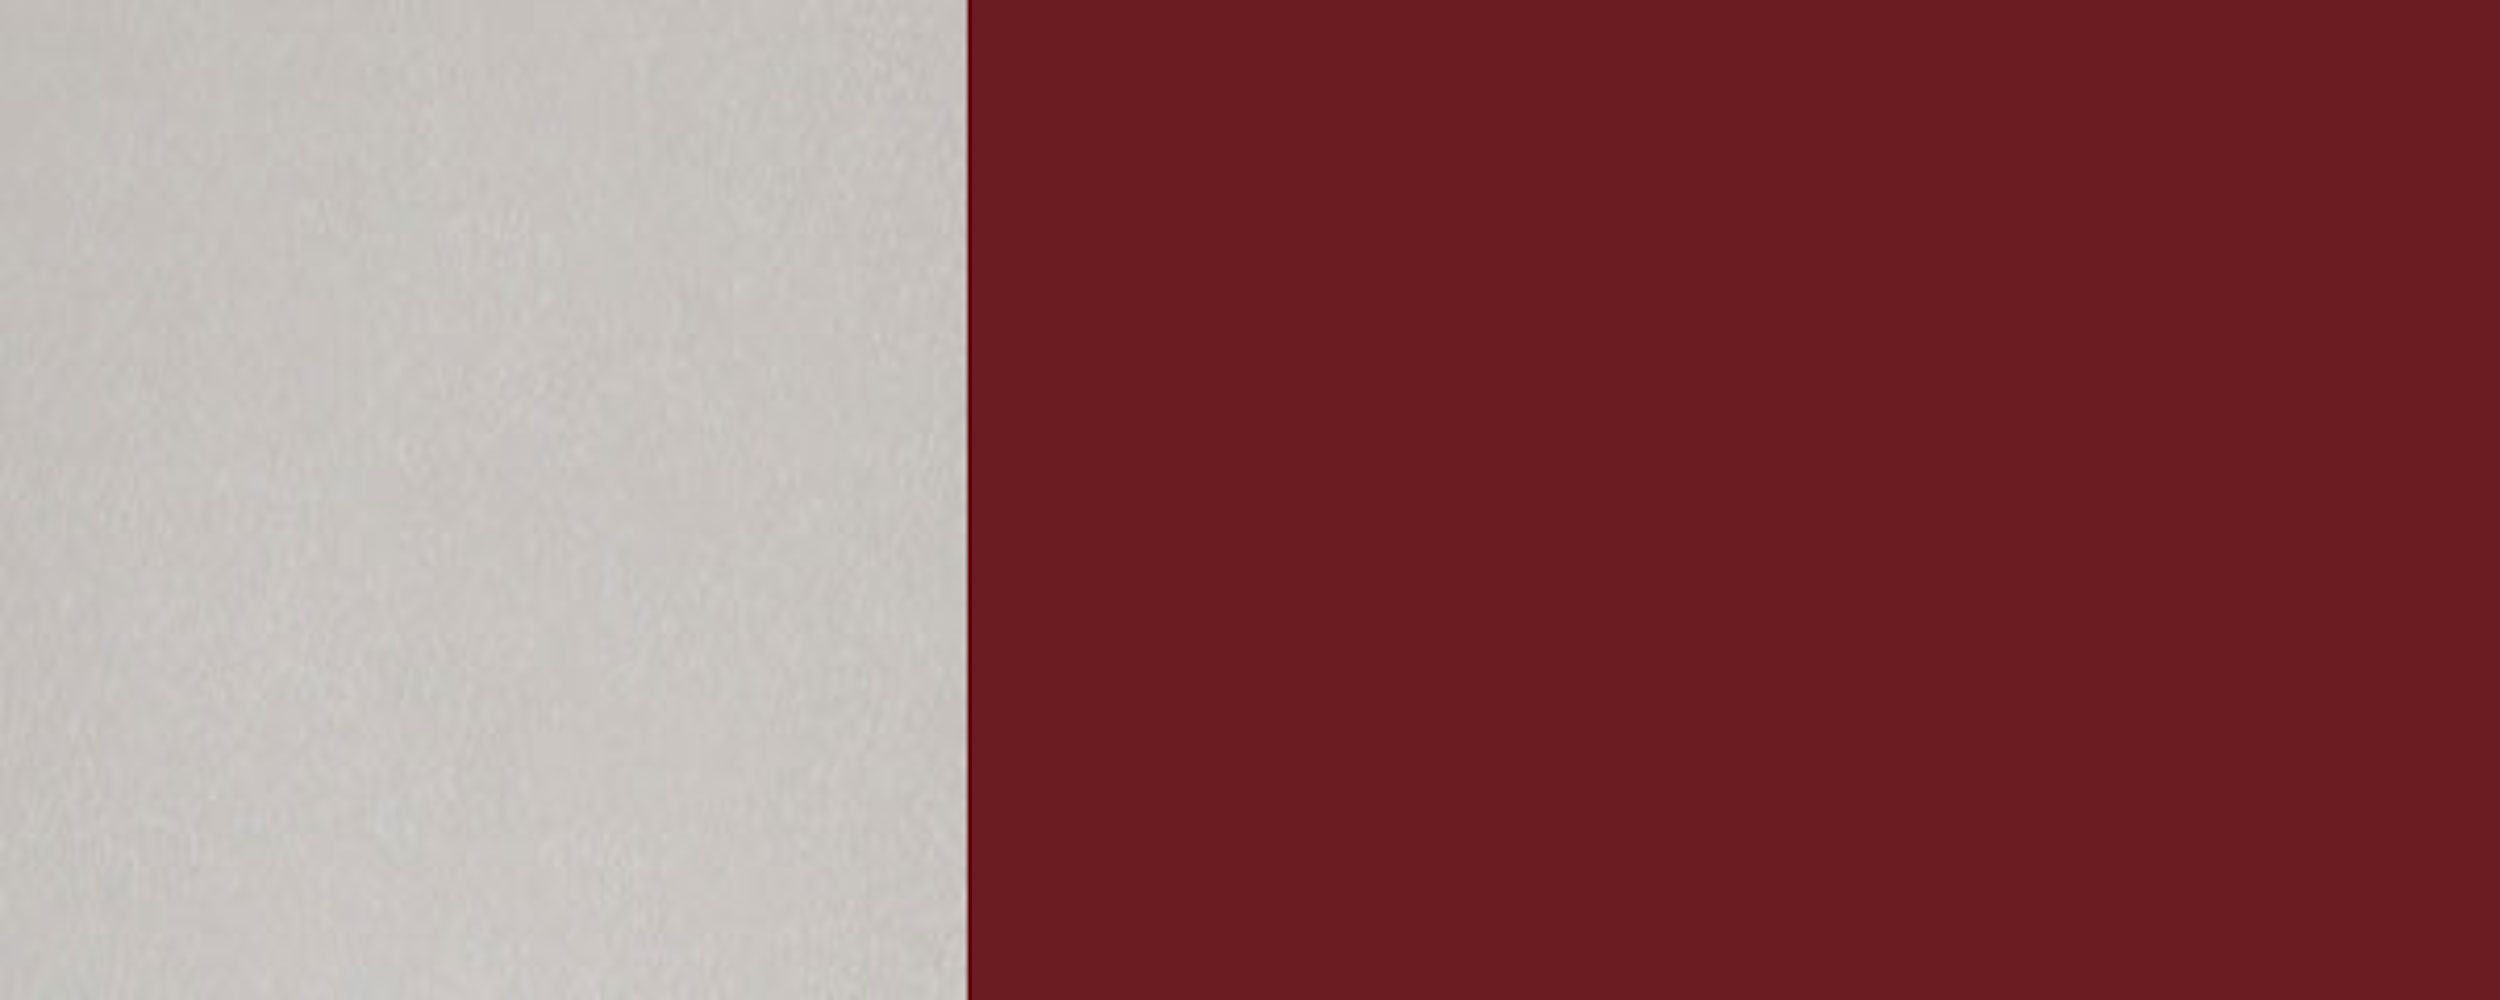 Feldmann-Wohnen Klapphängeschrank Rimini (Rimini) 40cm RAL purpurrot 1-türig 3004 wählbar Korpusfarbe Front- und matt